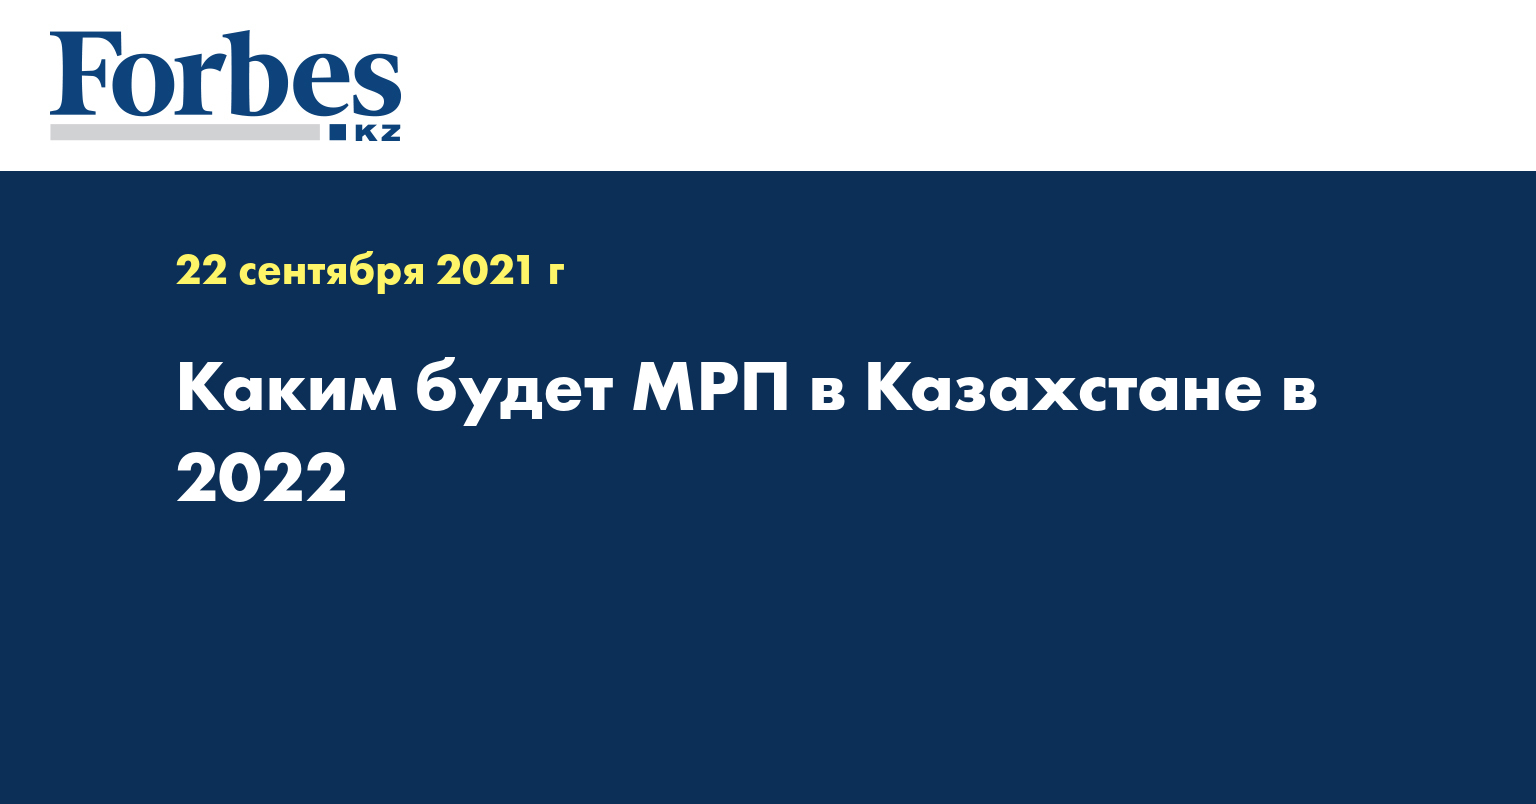 100 мрп в казахстане. МРП 2022 В Казахстане.